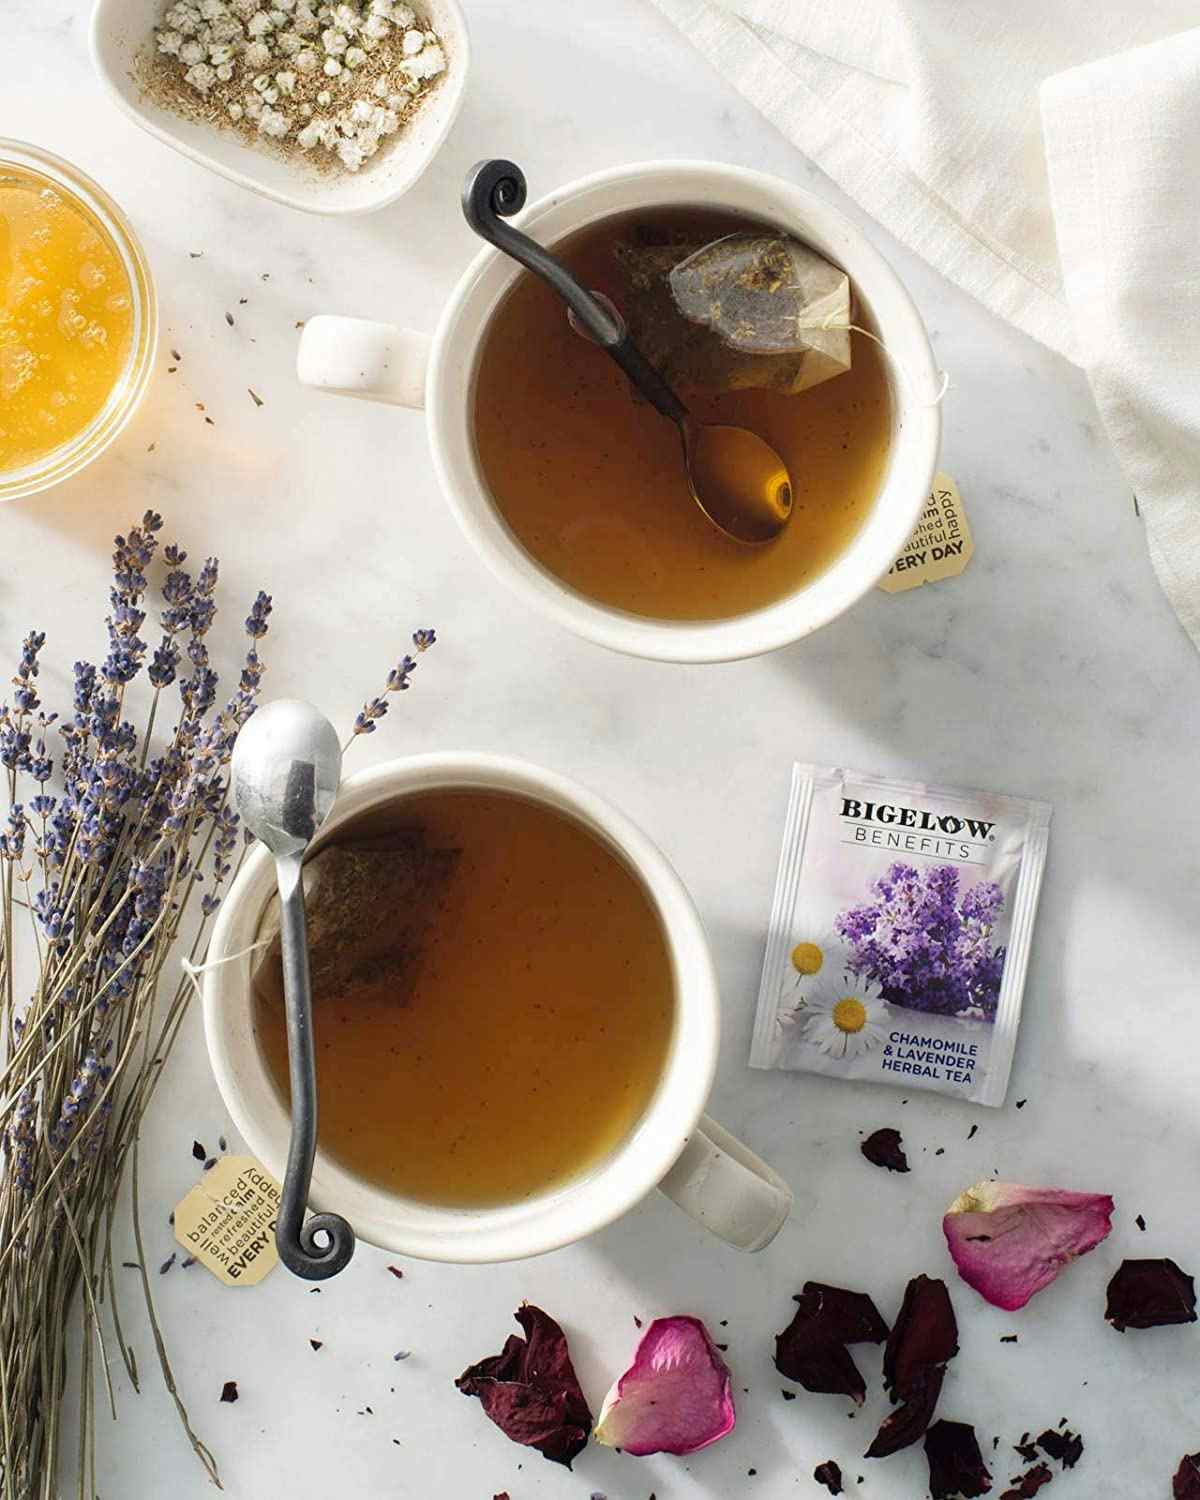 Bigelow Benefits Chamomile & Lavender Herbal Tea